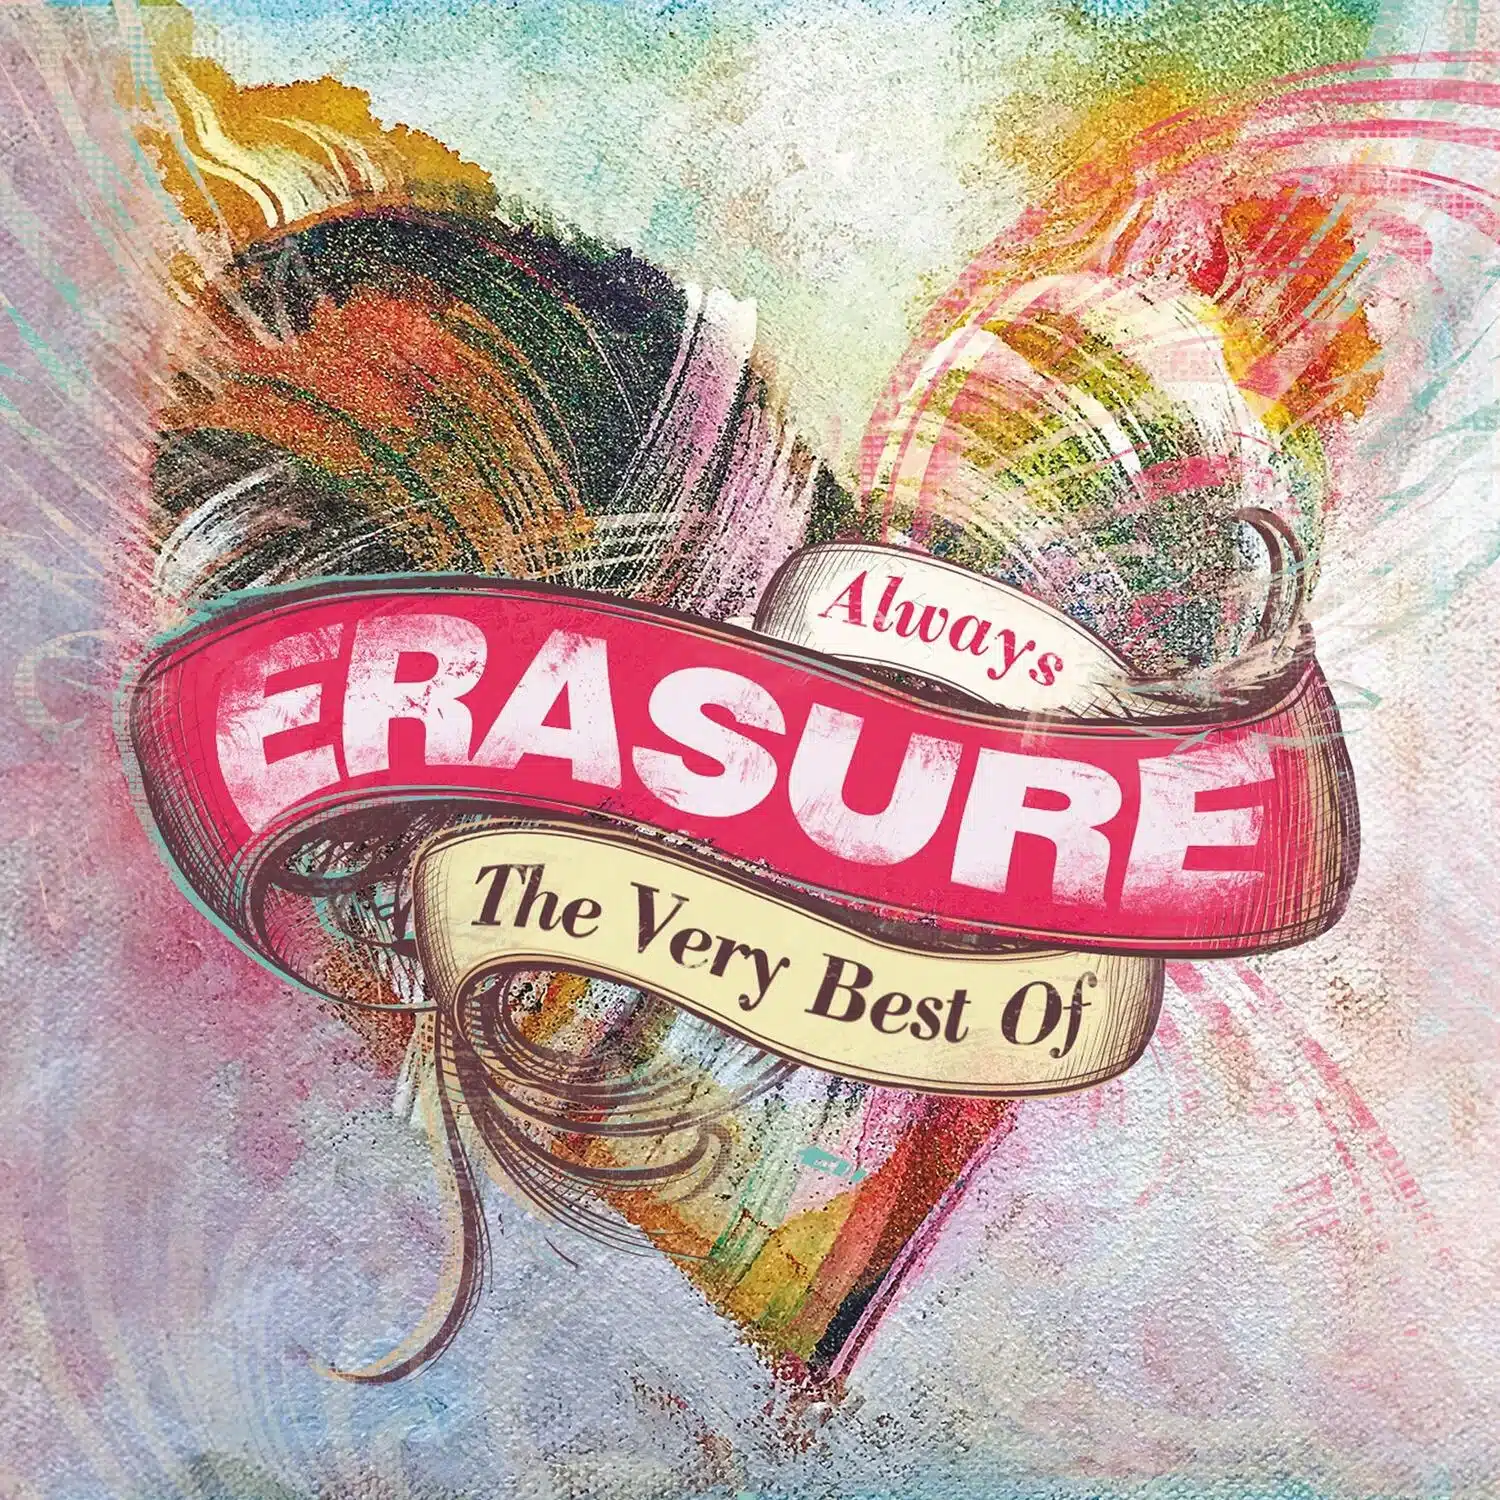 ERASURE - ALWAYS, The Very Best Of Erasure